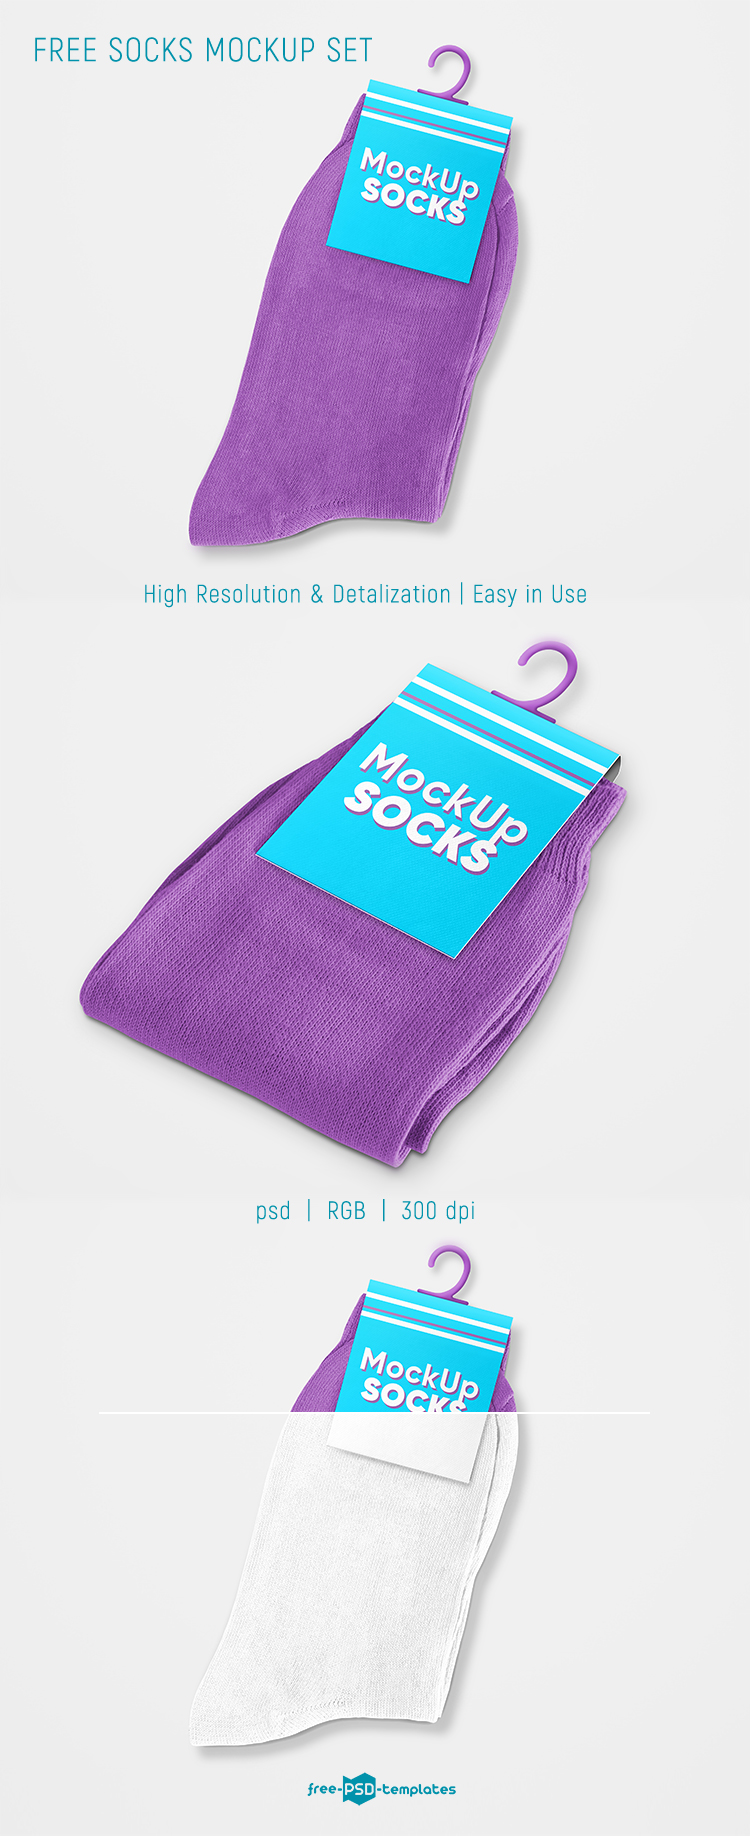 Download Free Socks Mockup Set | Free PSD Templates